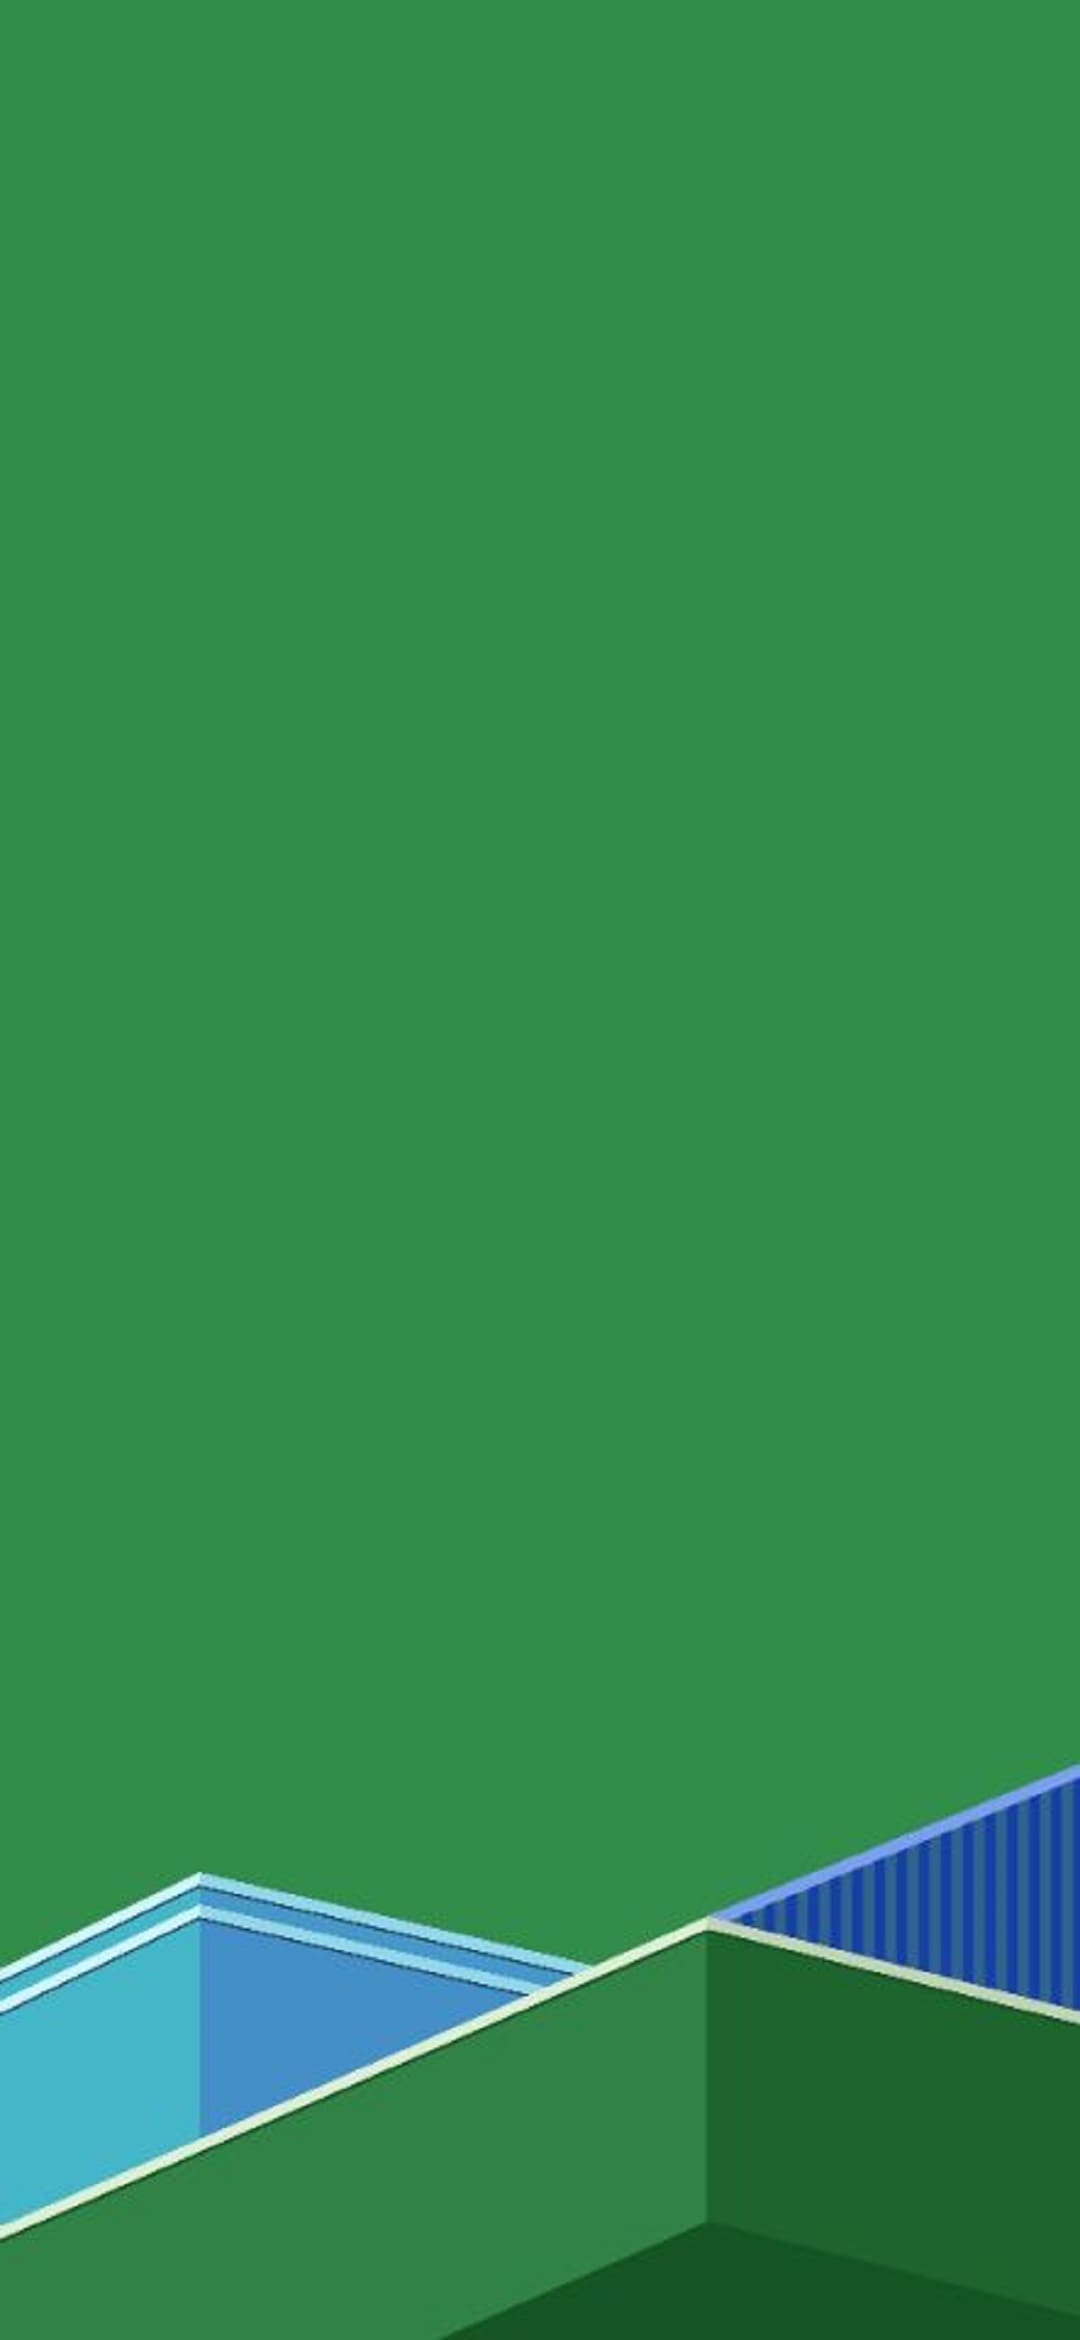 oppo r9s wallpaper,grün,blau,schlägersport,tagsüber,blatt